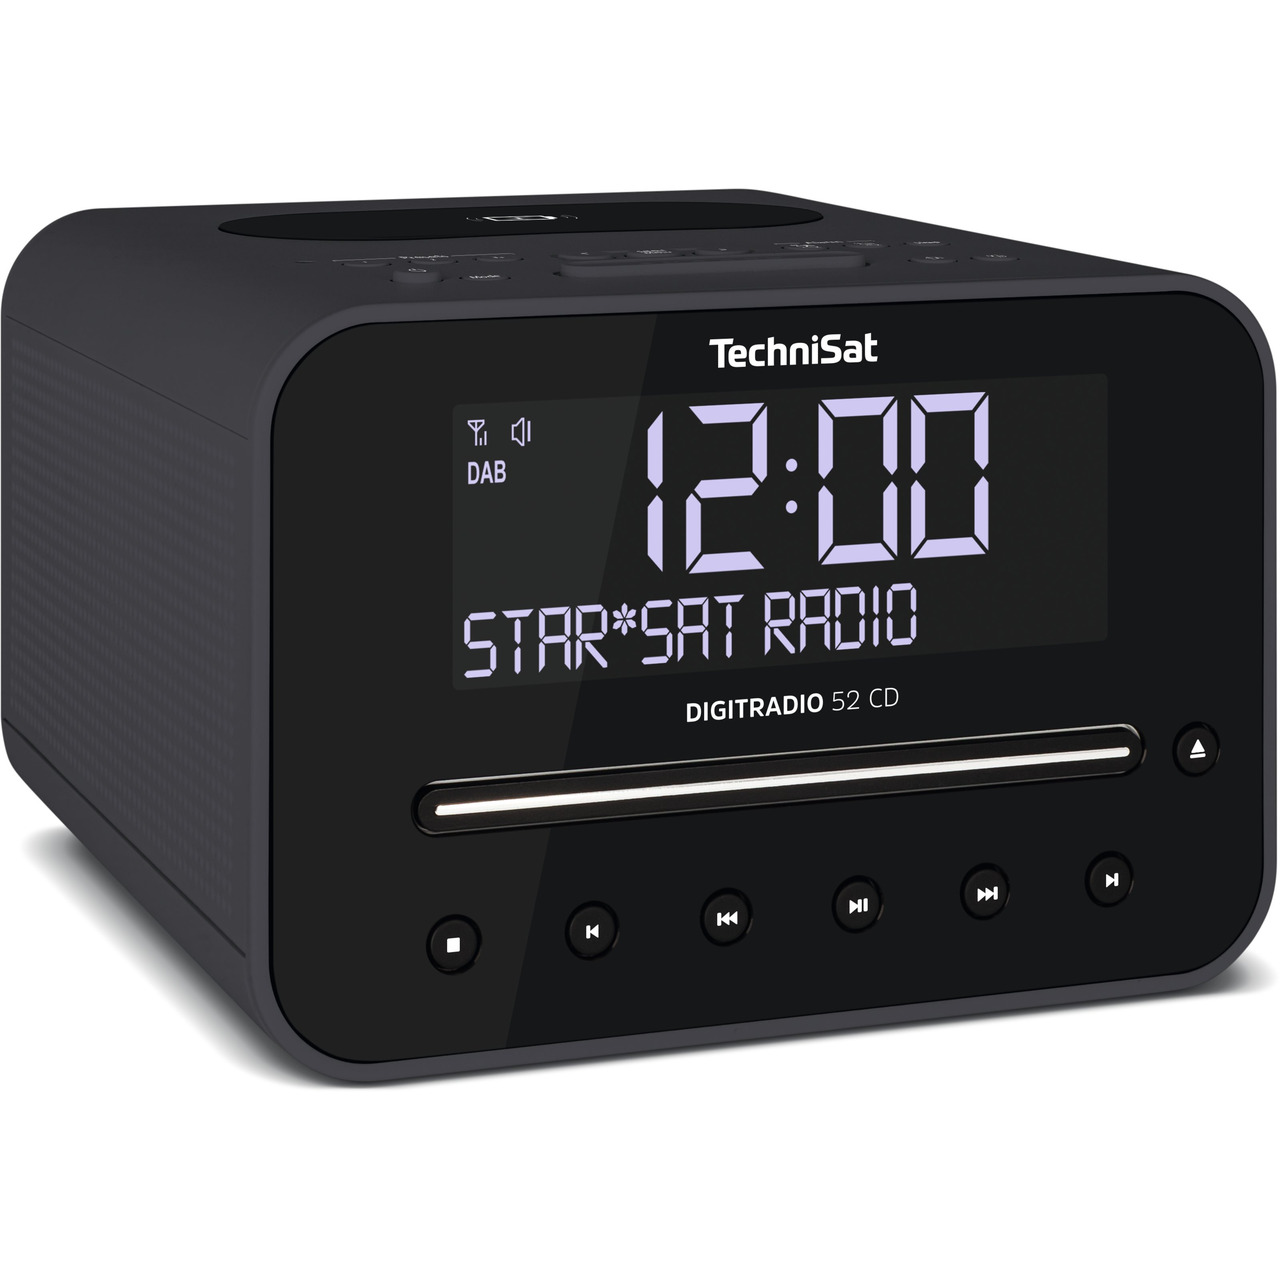 TechniSat Uhrenradio DigitRadio 52 CD- DAB+-UKW-Empfang- CD-Player- Bluetooth-Funktion- schwarz